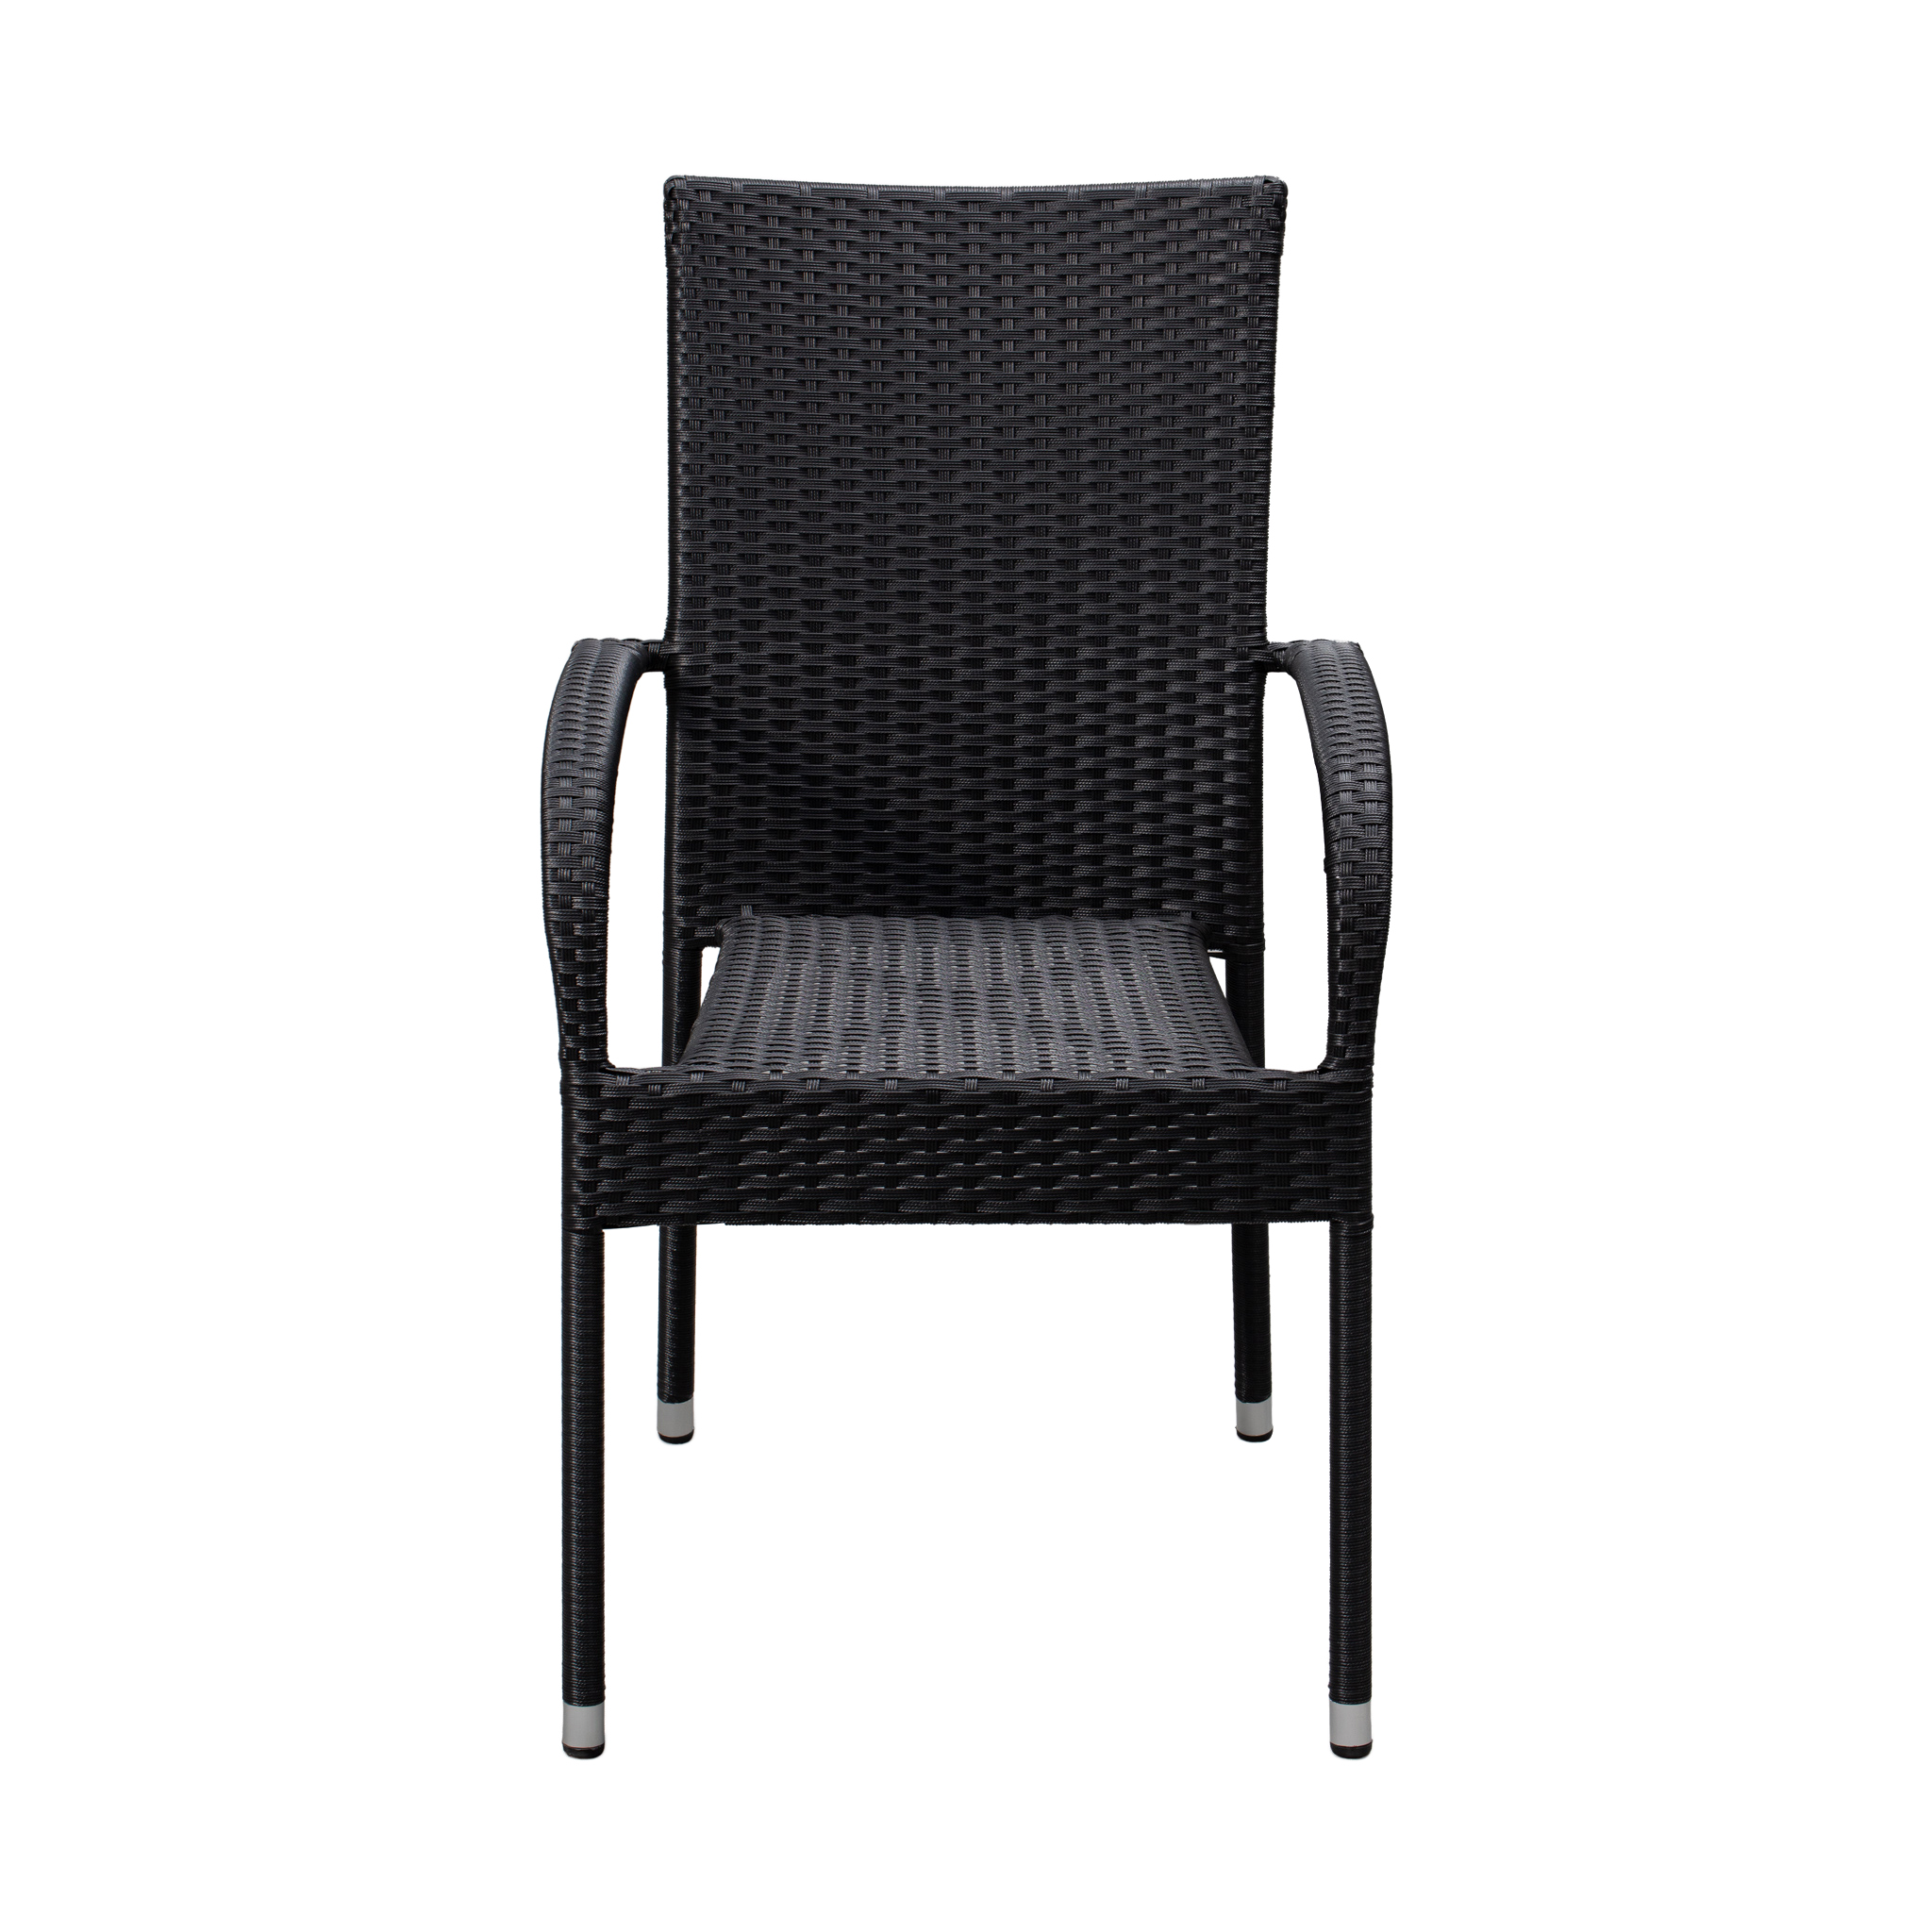 Outdoor Wicker Chair Black Set of 4 Well